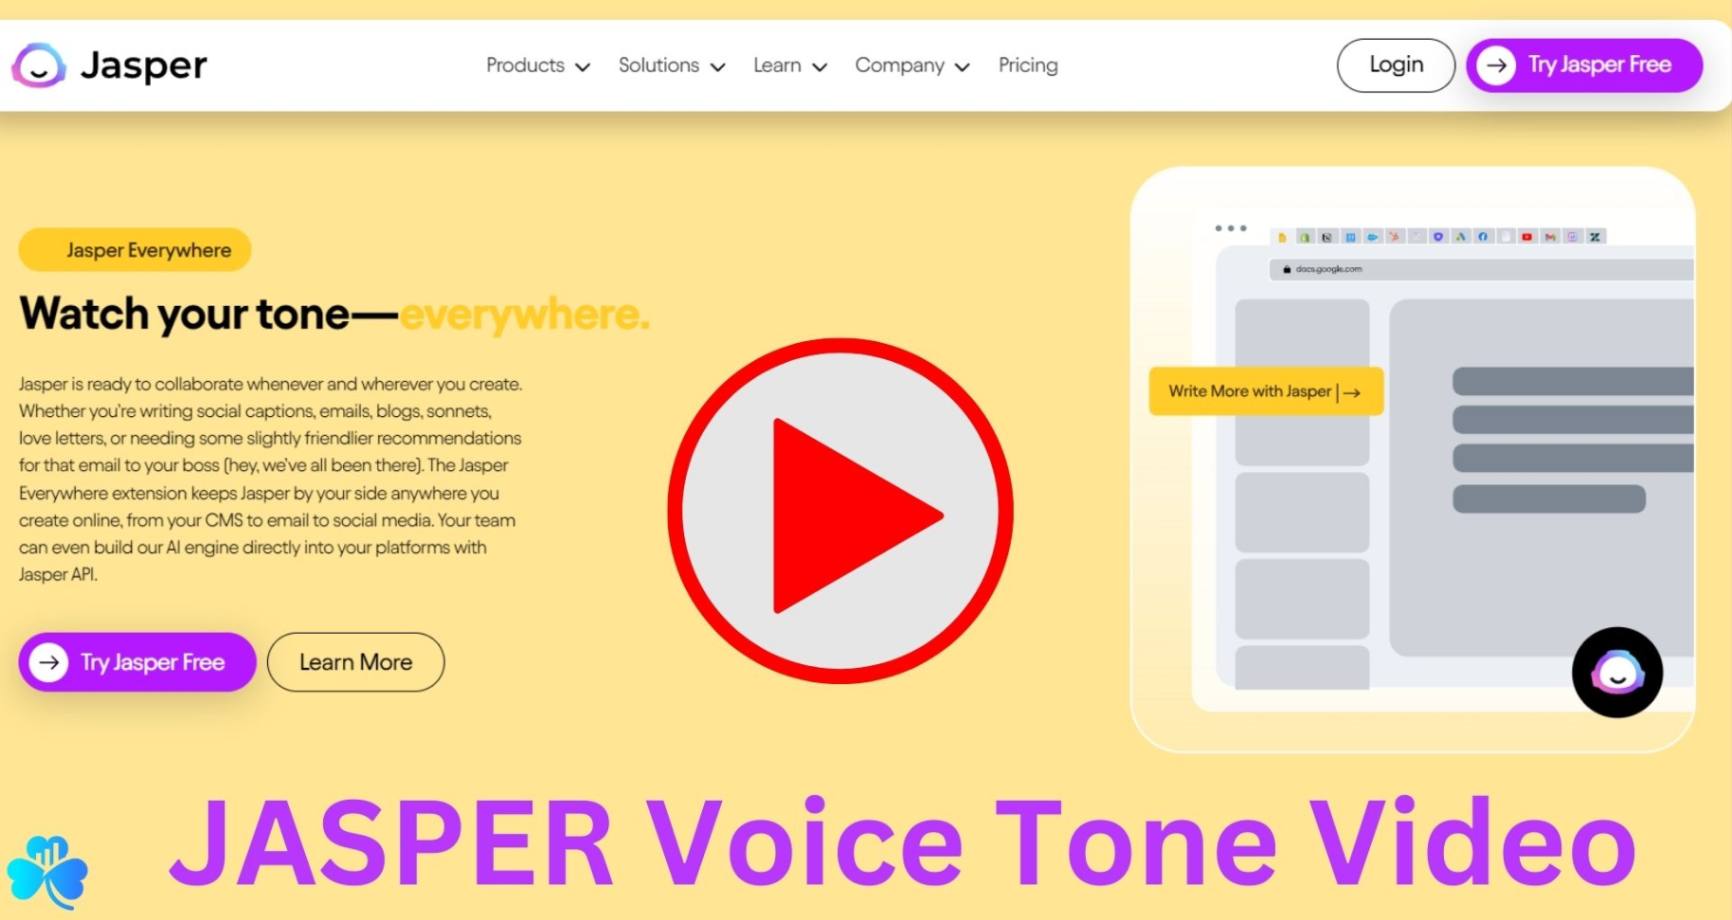 Jasper voice tone video 